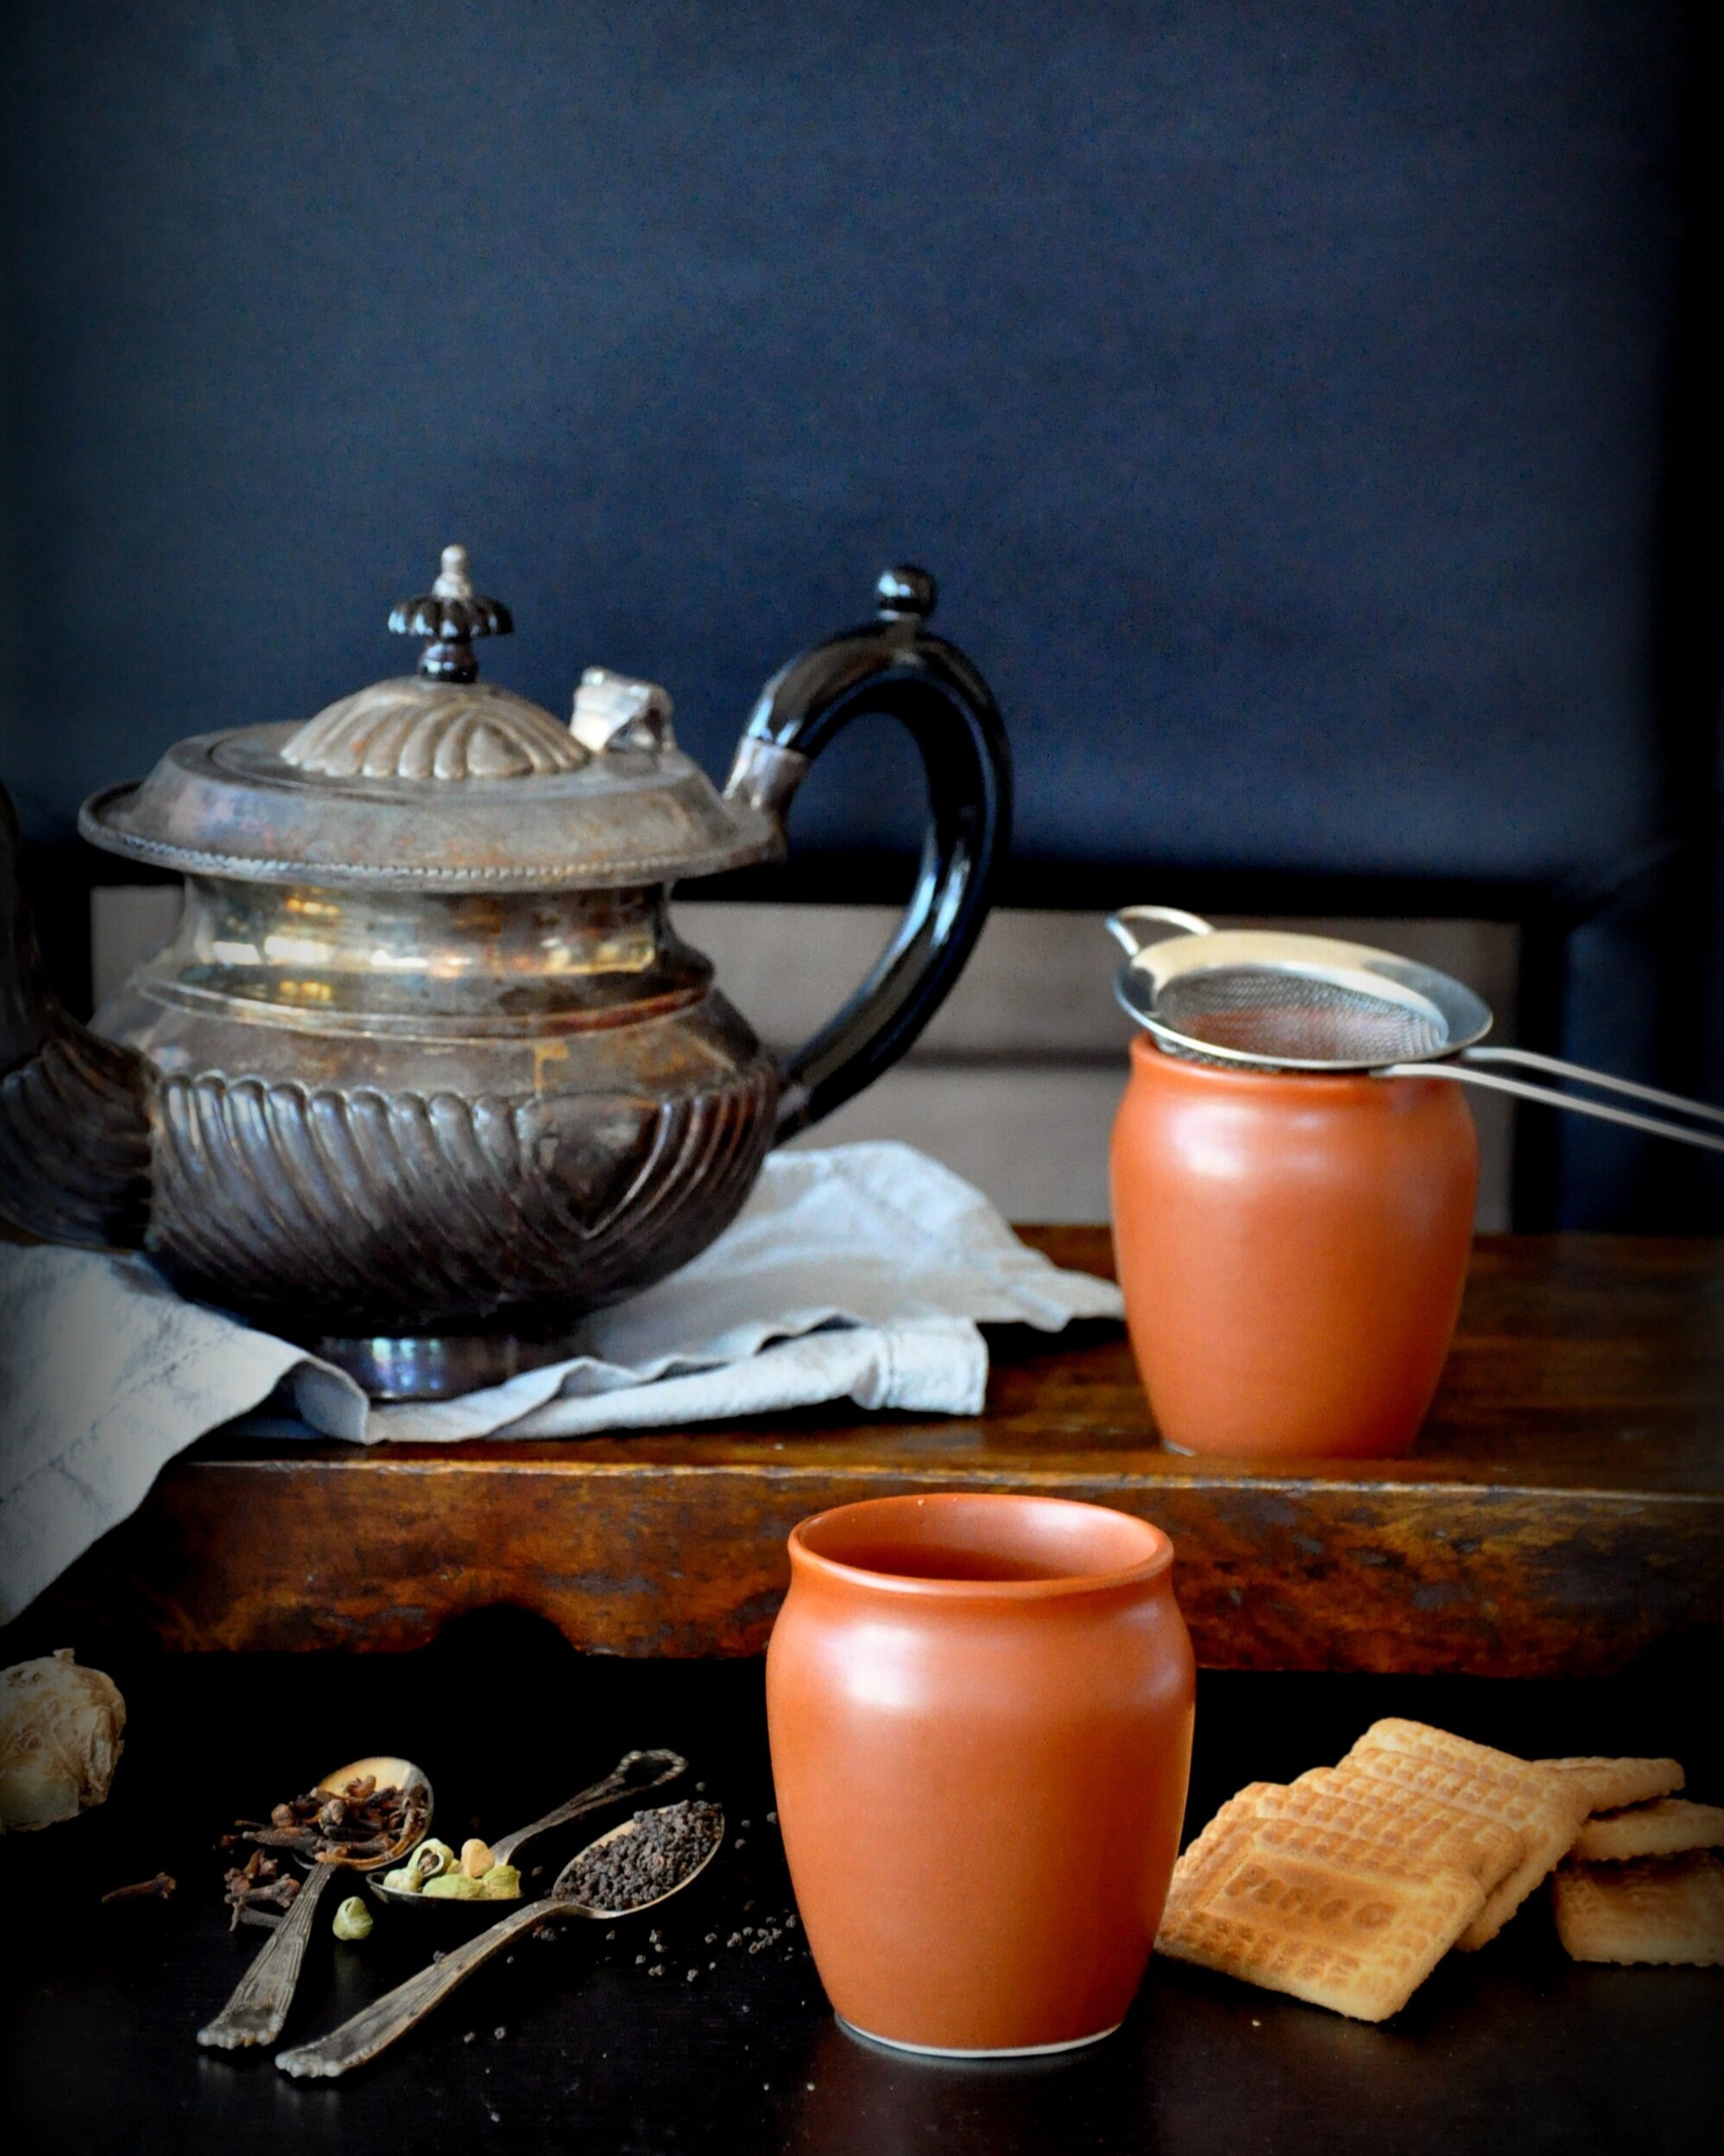 Indian Masala Chai (Spiced Milk Tea) - Piping Pot Curry